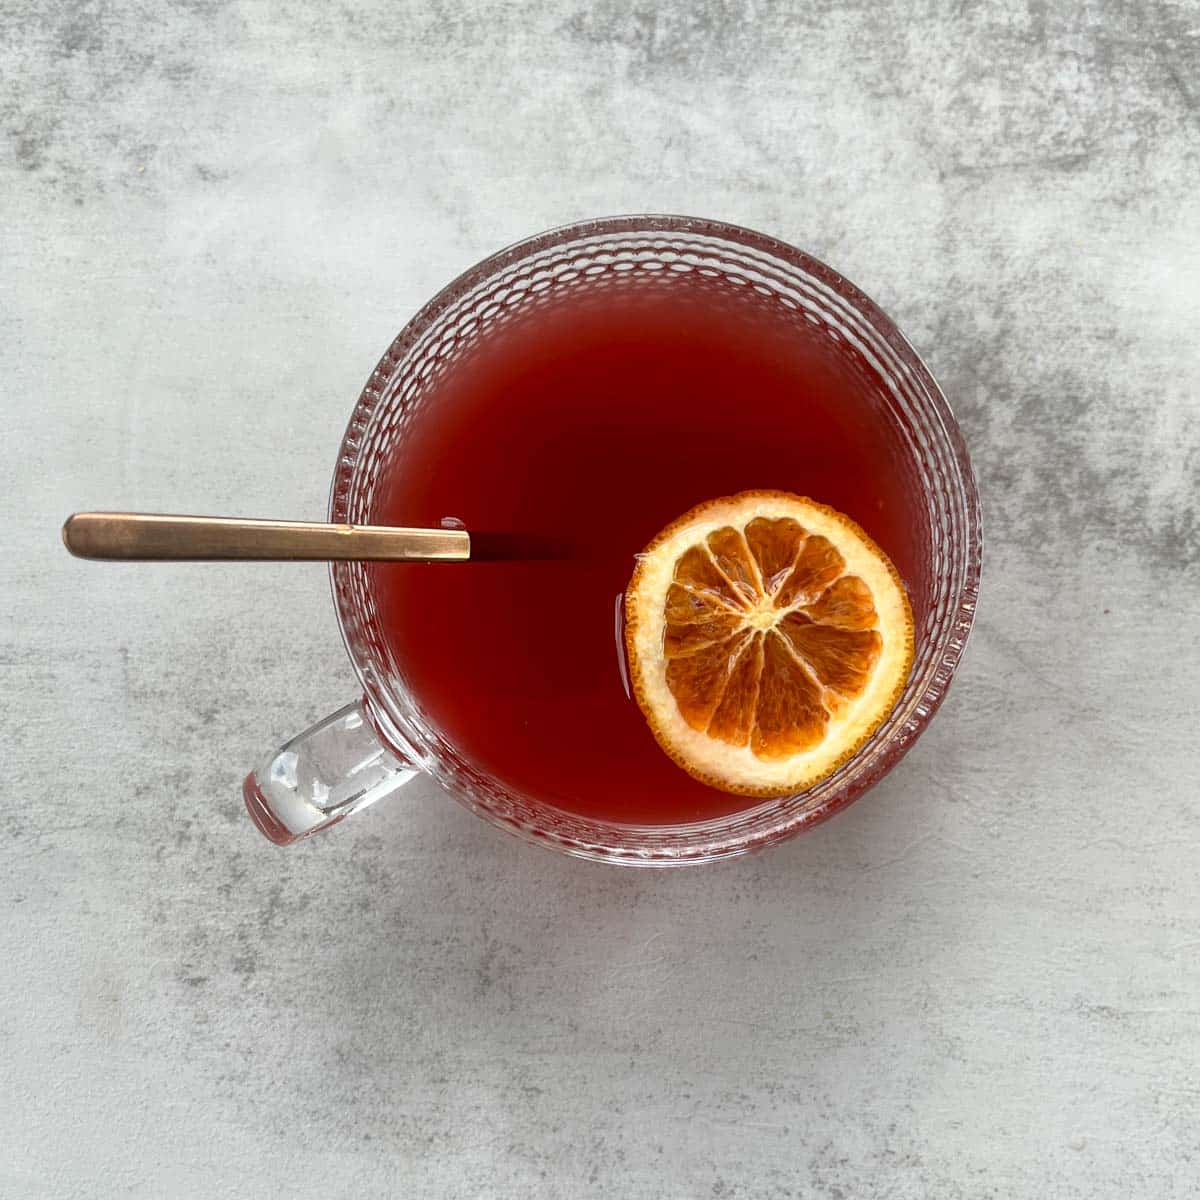 elderberry tea with orange slice and brass spoon